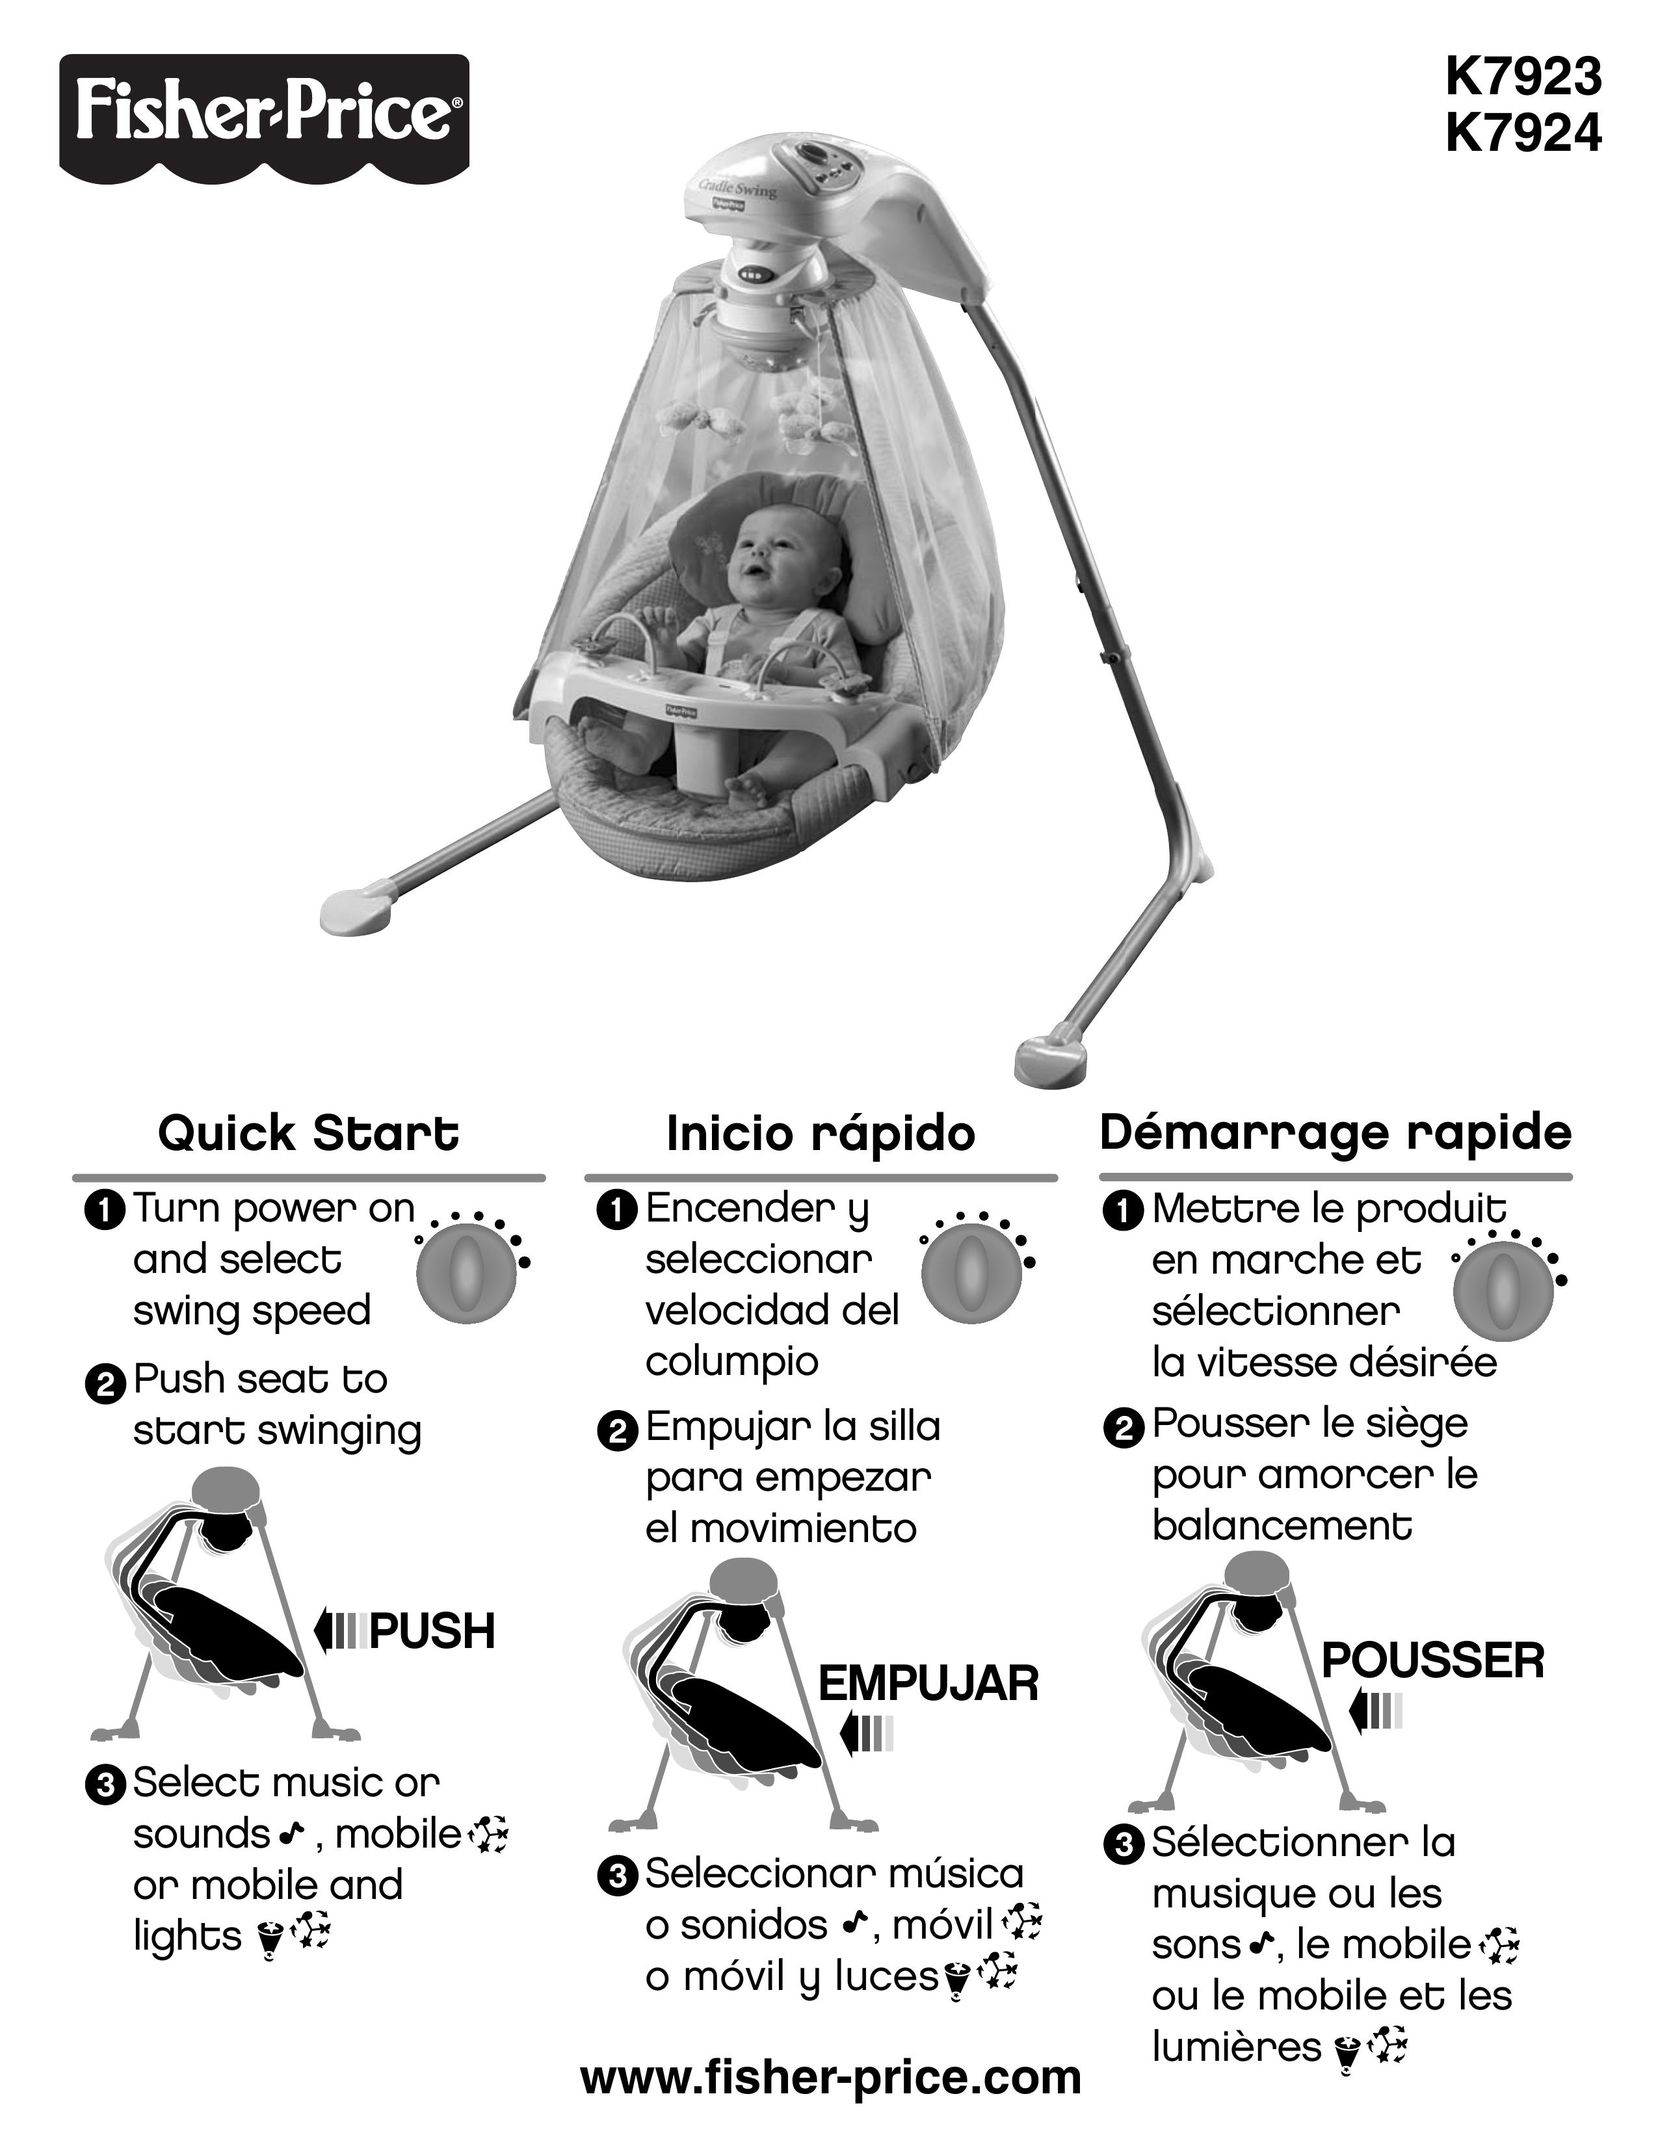 Fisher-Price K7924 Baby Swing User Manual